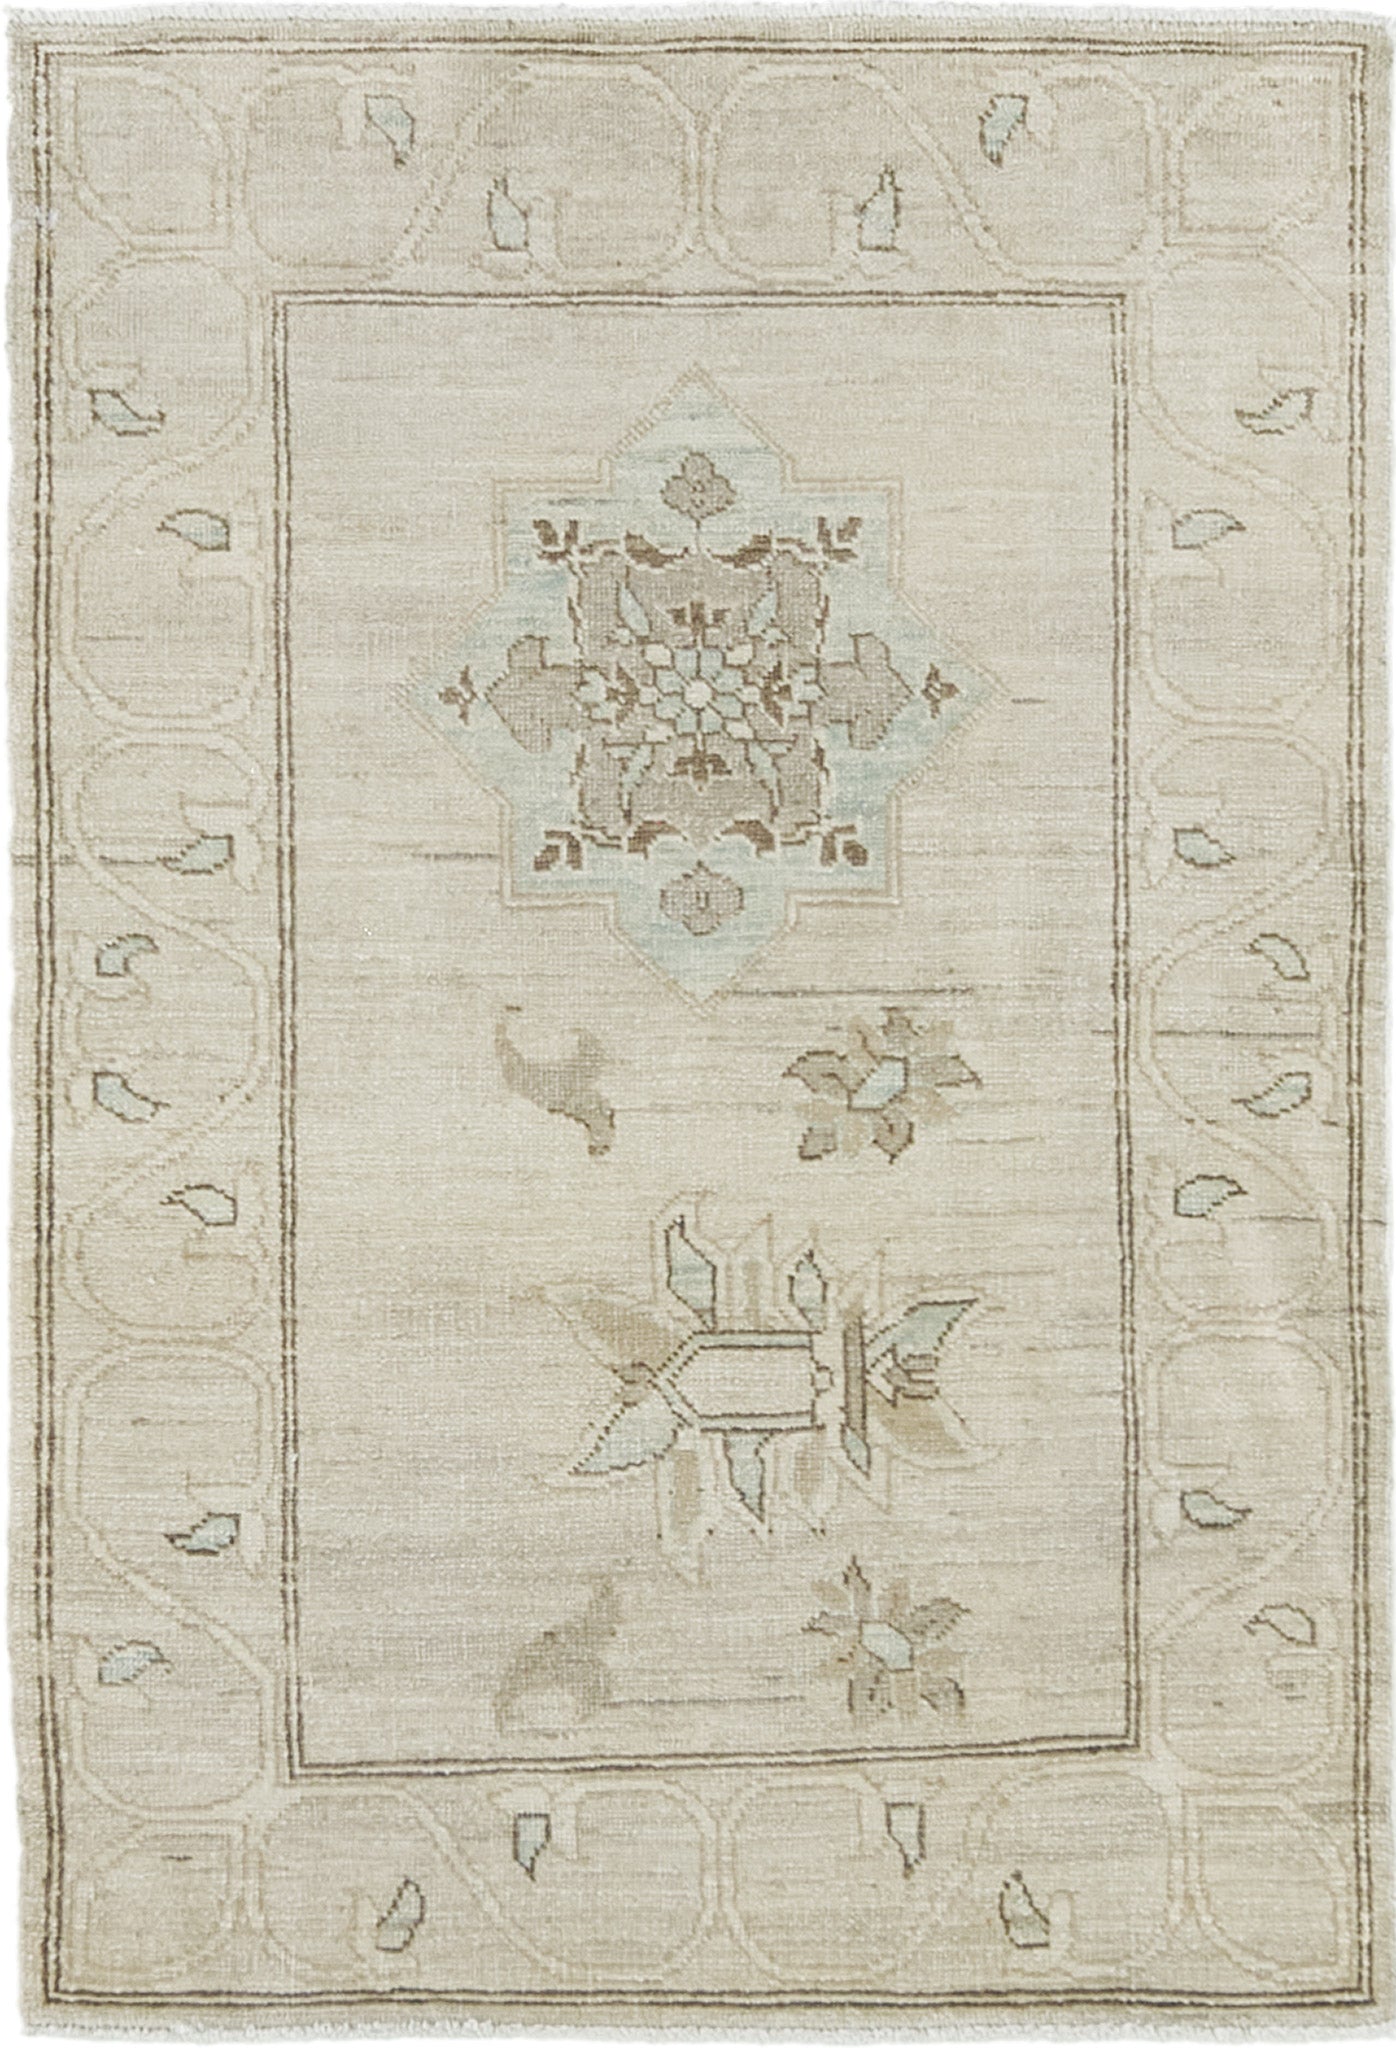 18th Century Khotan Design Revival Rug